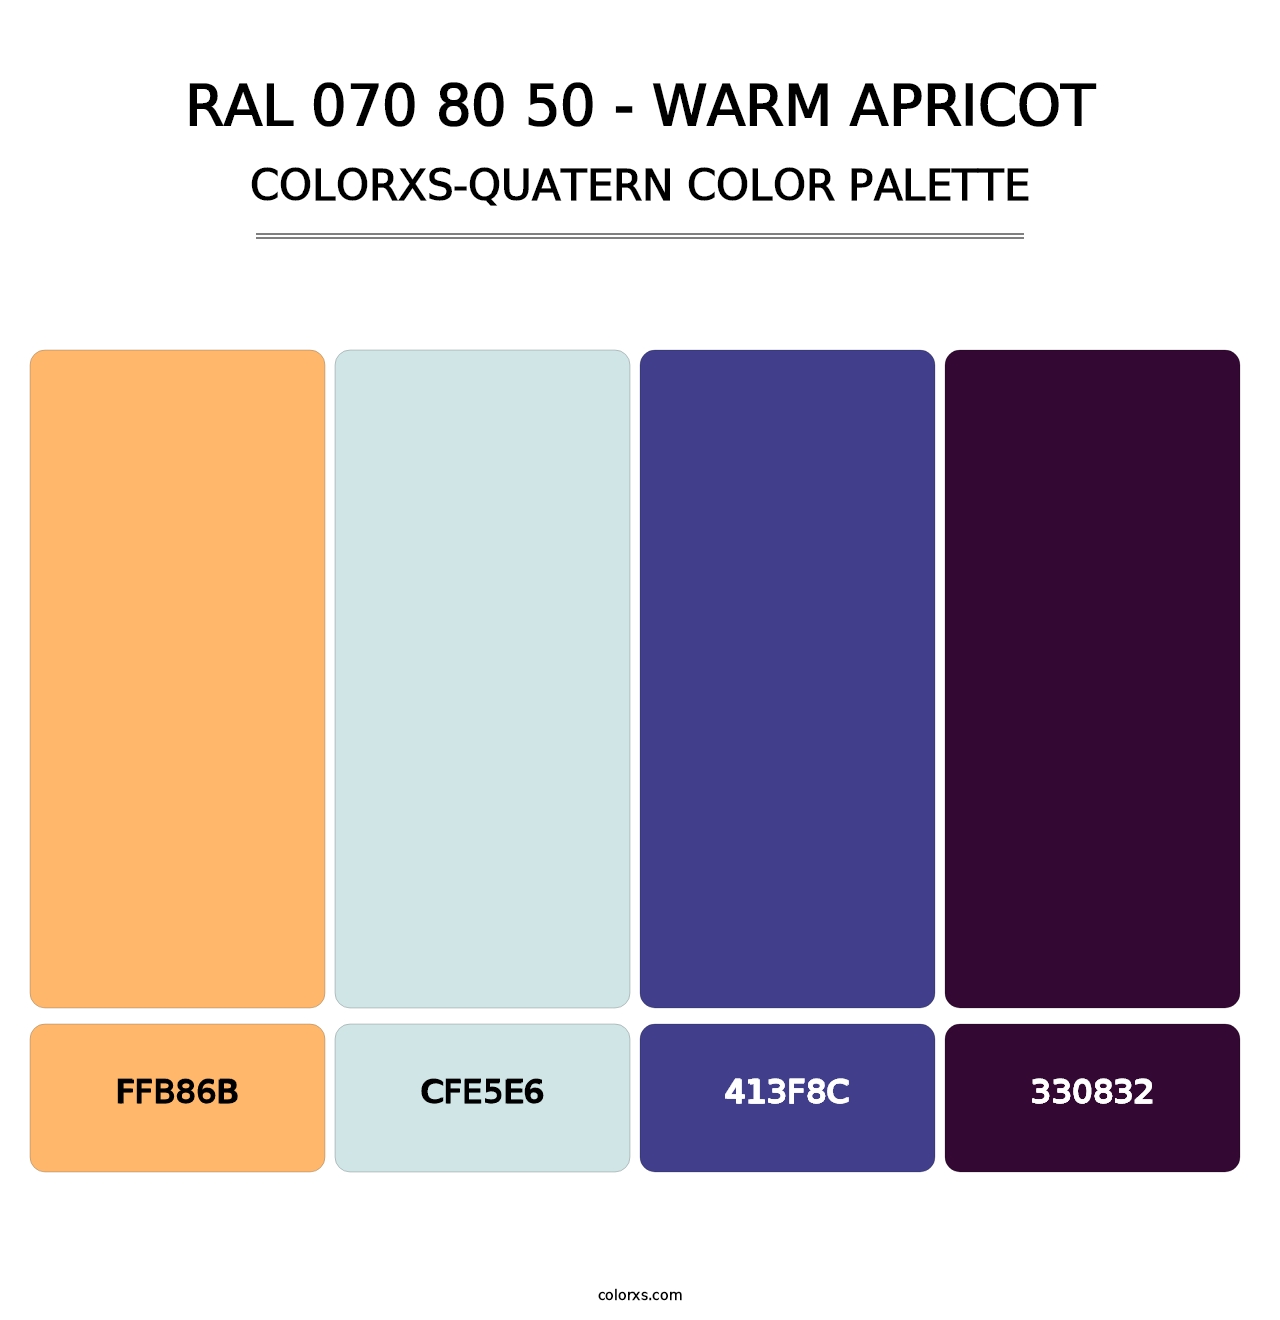 RAL 070 80 50 - Warm Apricot - Colorxs Quatern Palette